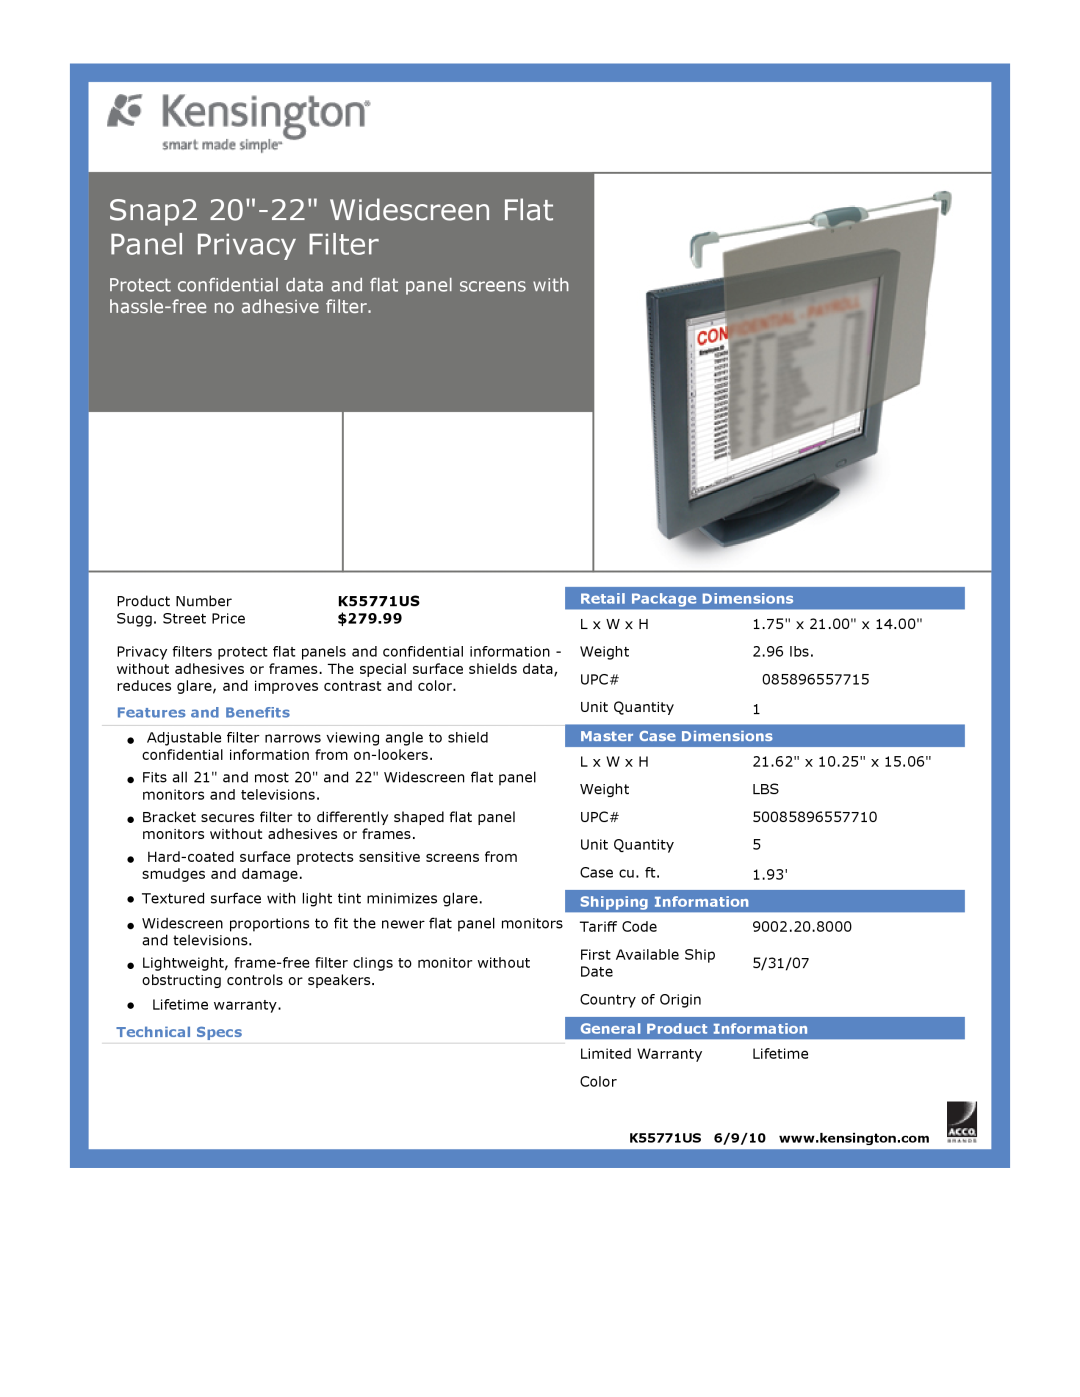 Kensington EU64325 Snap2 20-22Widescreen Flat Panel Privacy Filter, $279.99, Features and Benefits, Technical Specs 